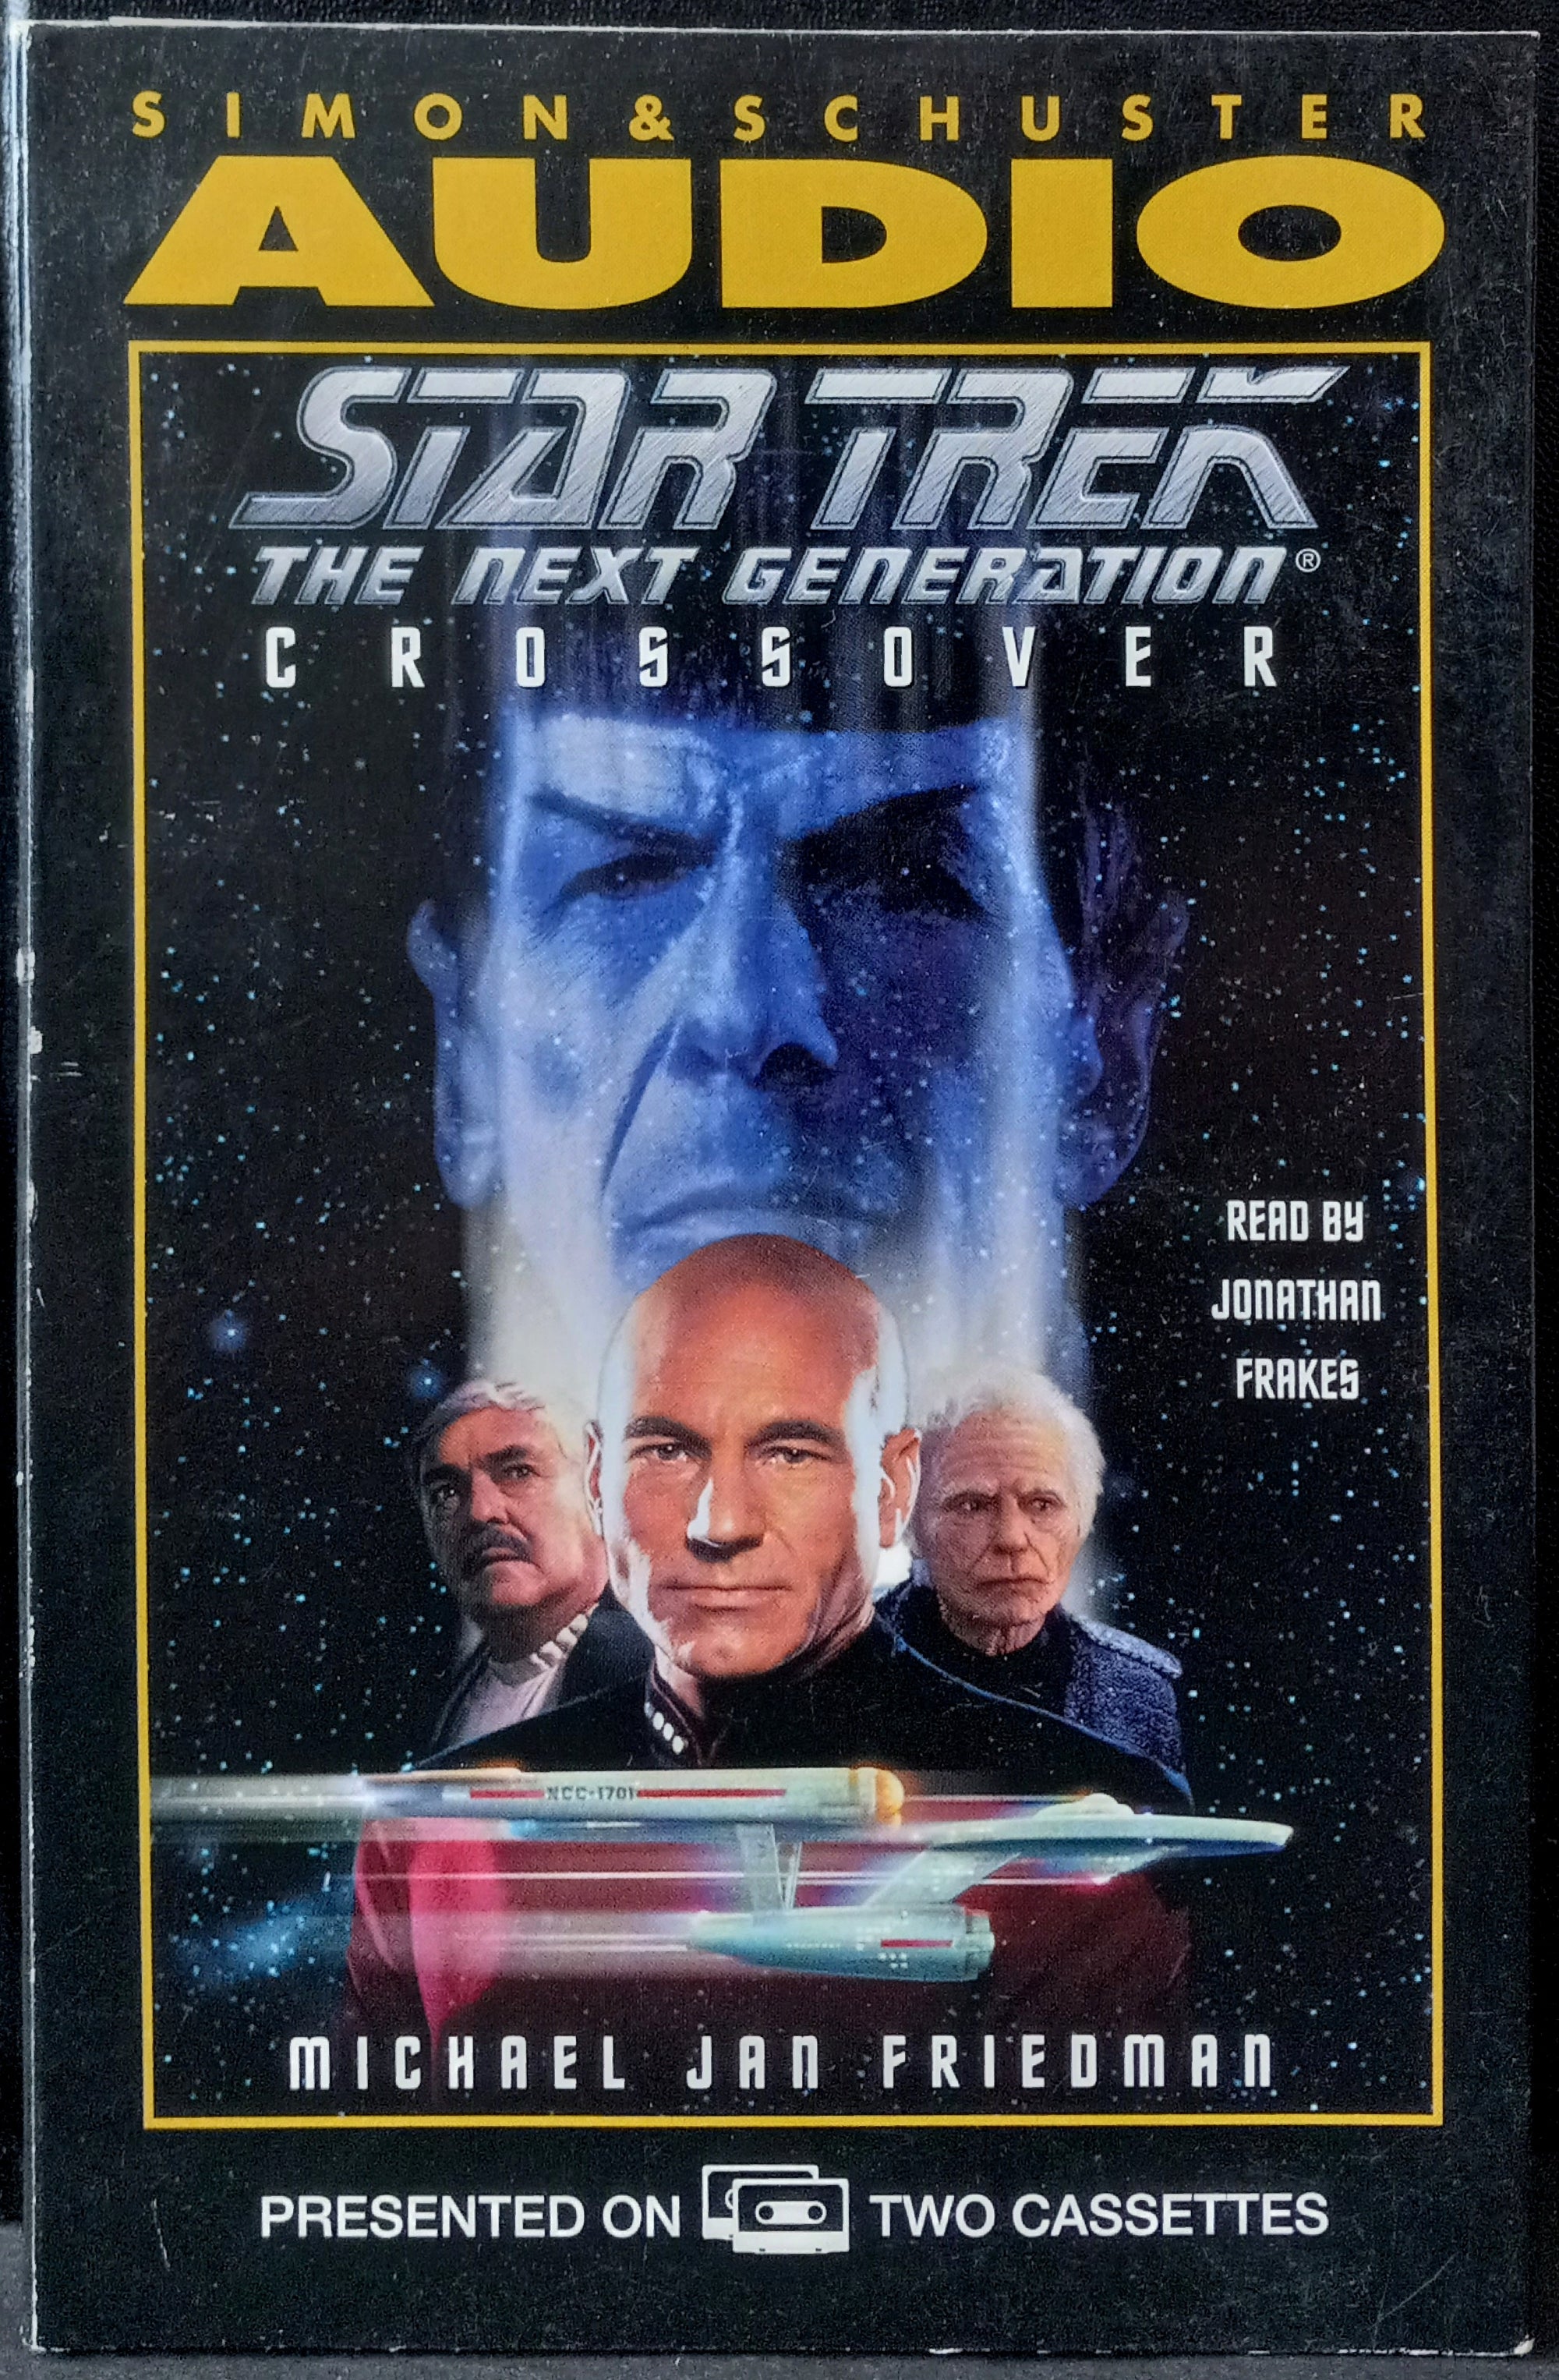 Star-Trek-TNG-Crossover-Cassette